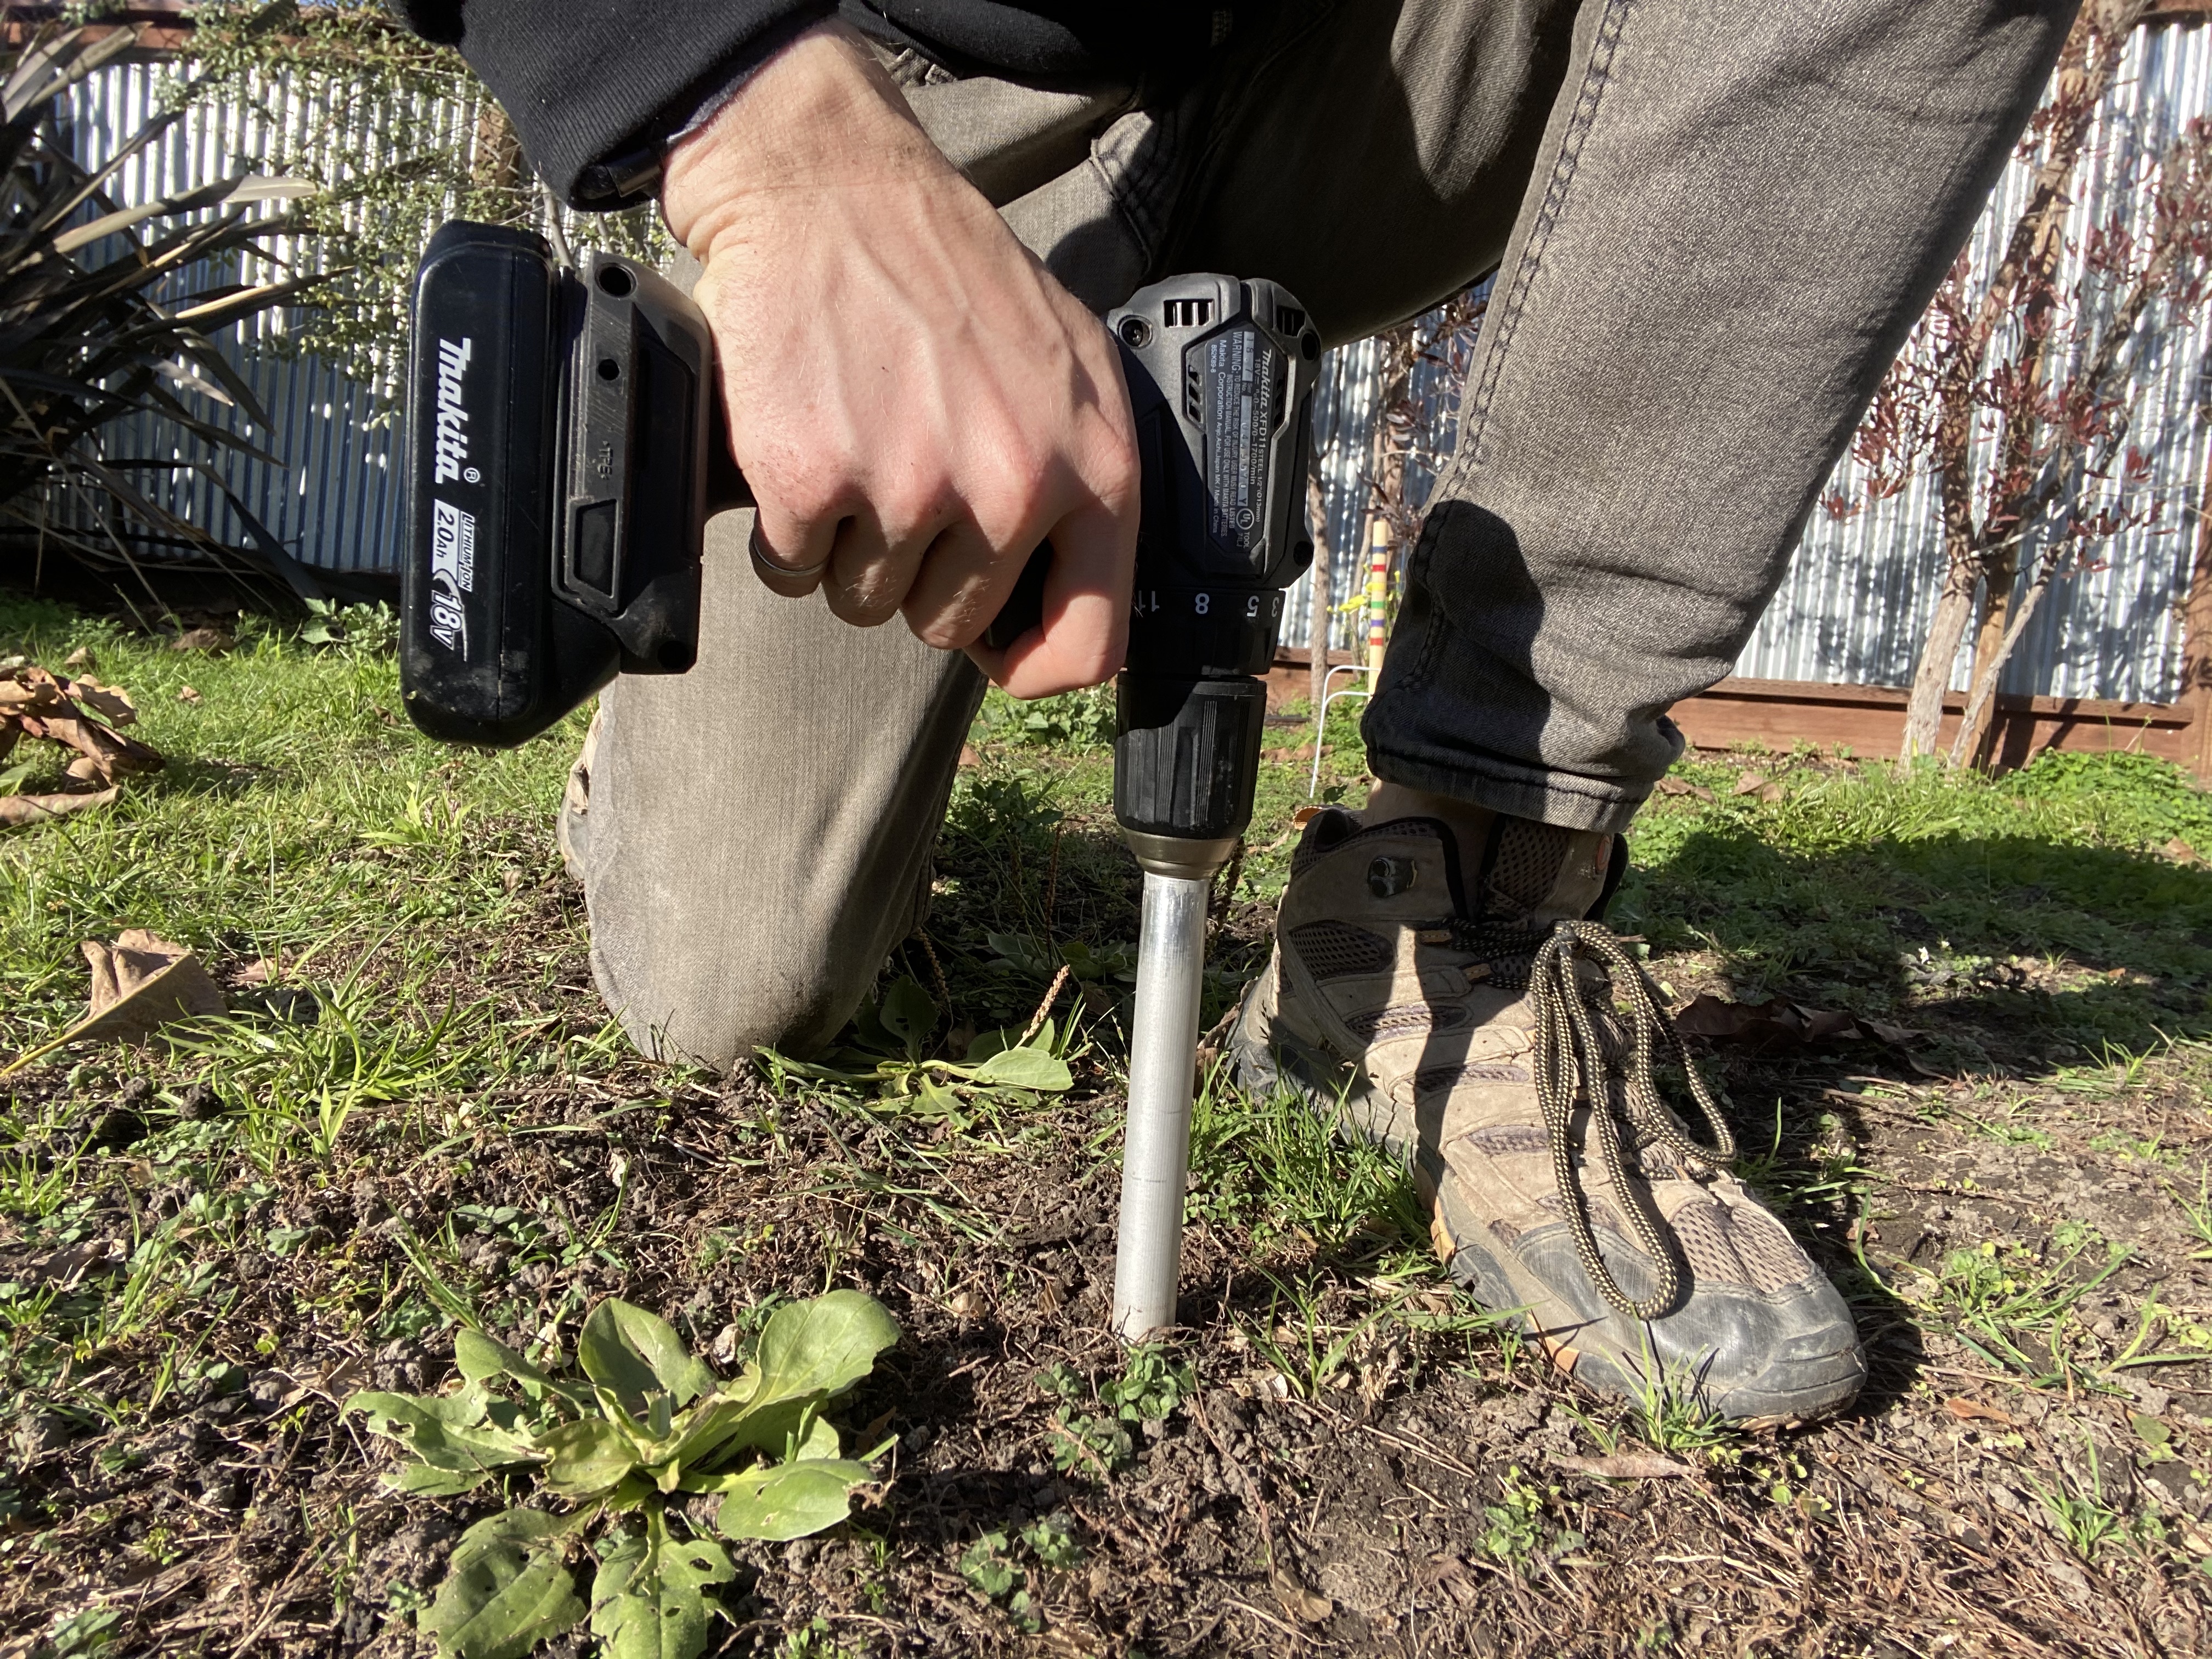 Yard Stick provides measurement technology to combat climate